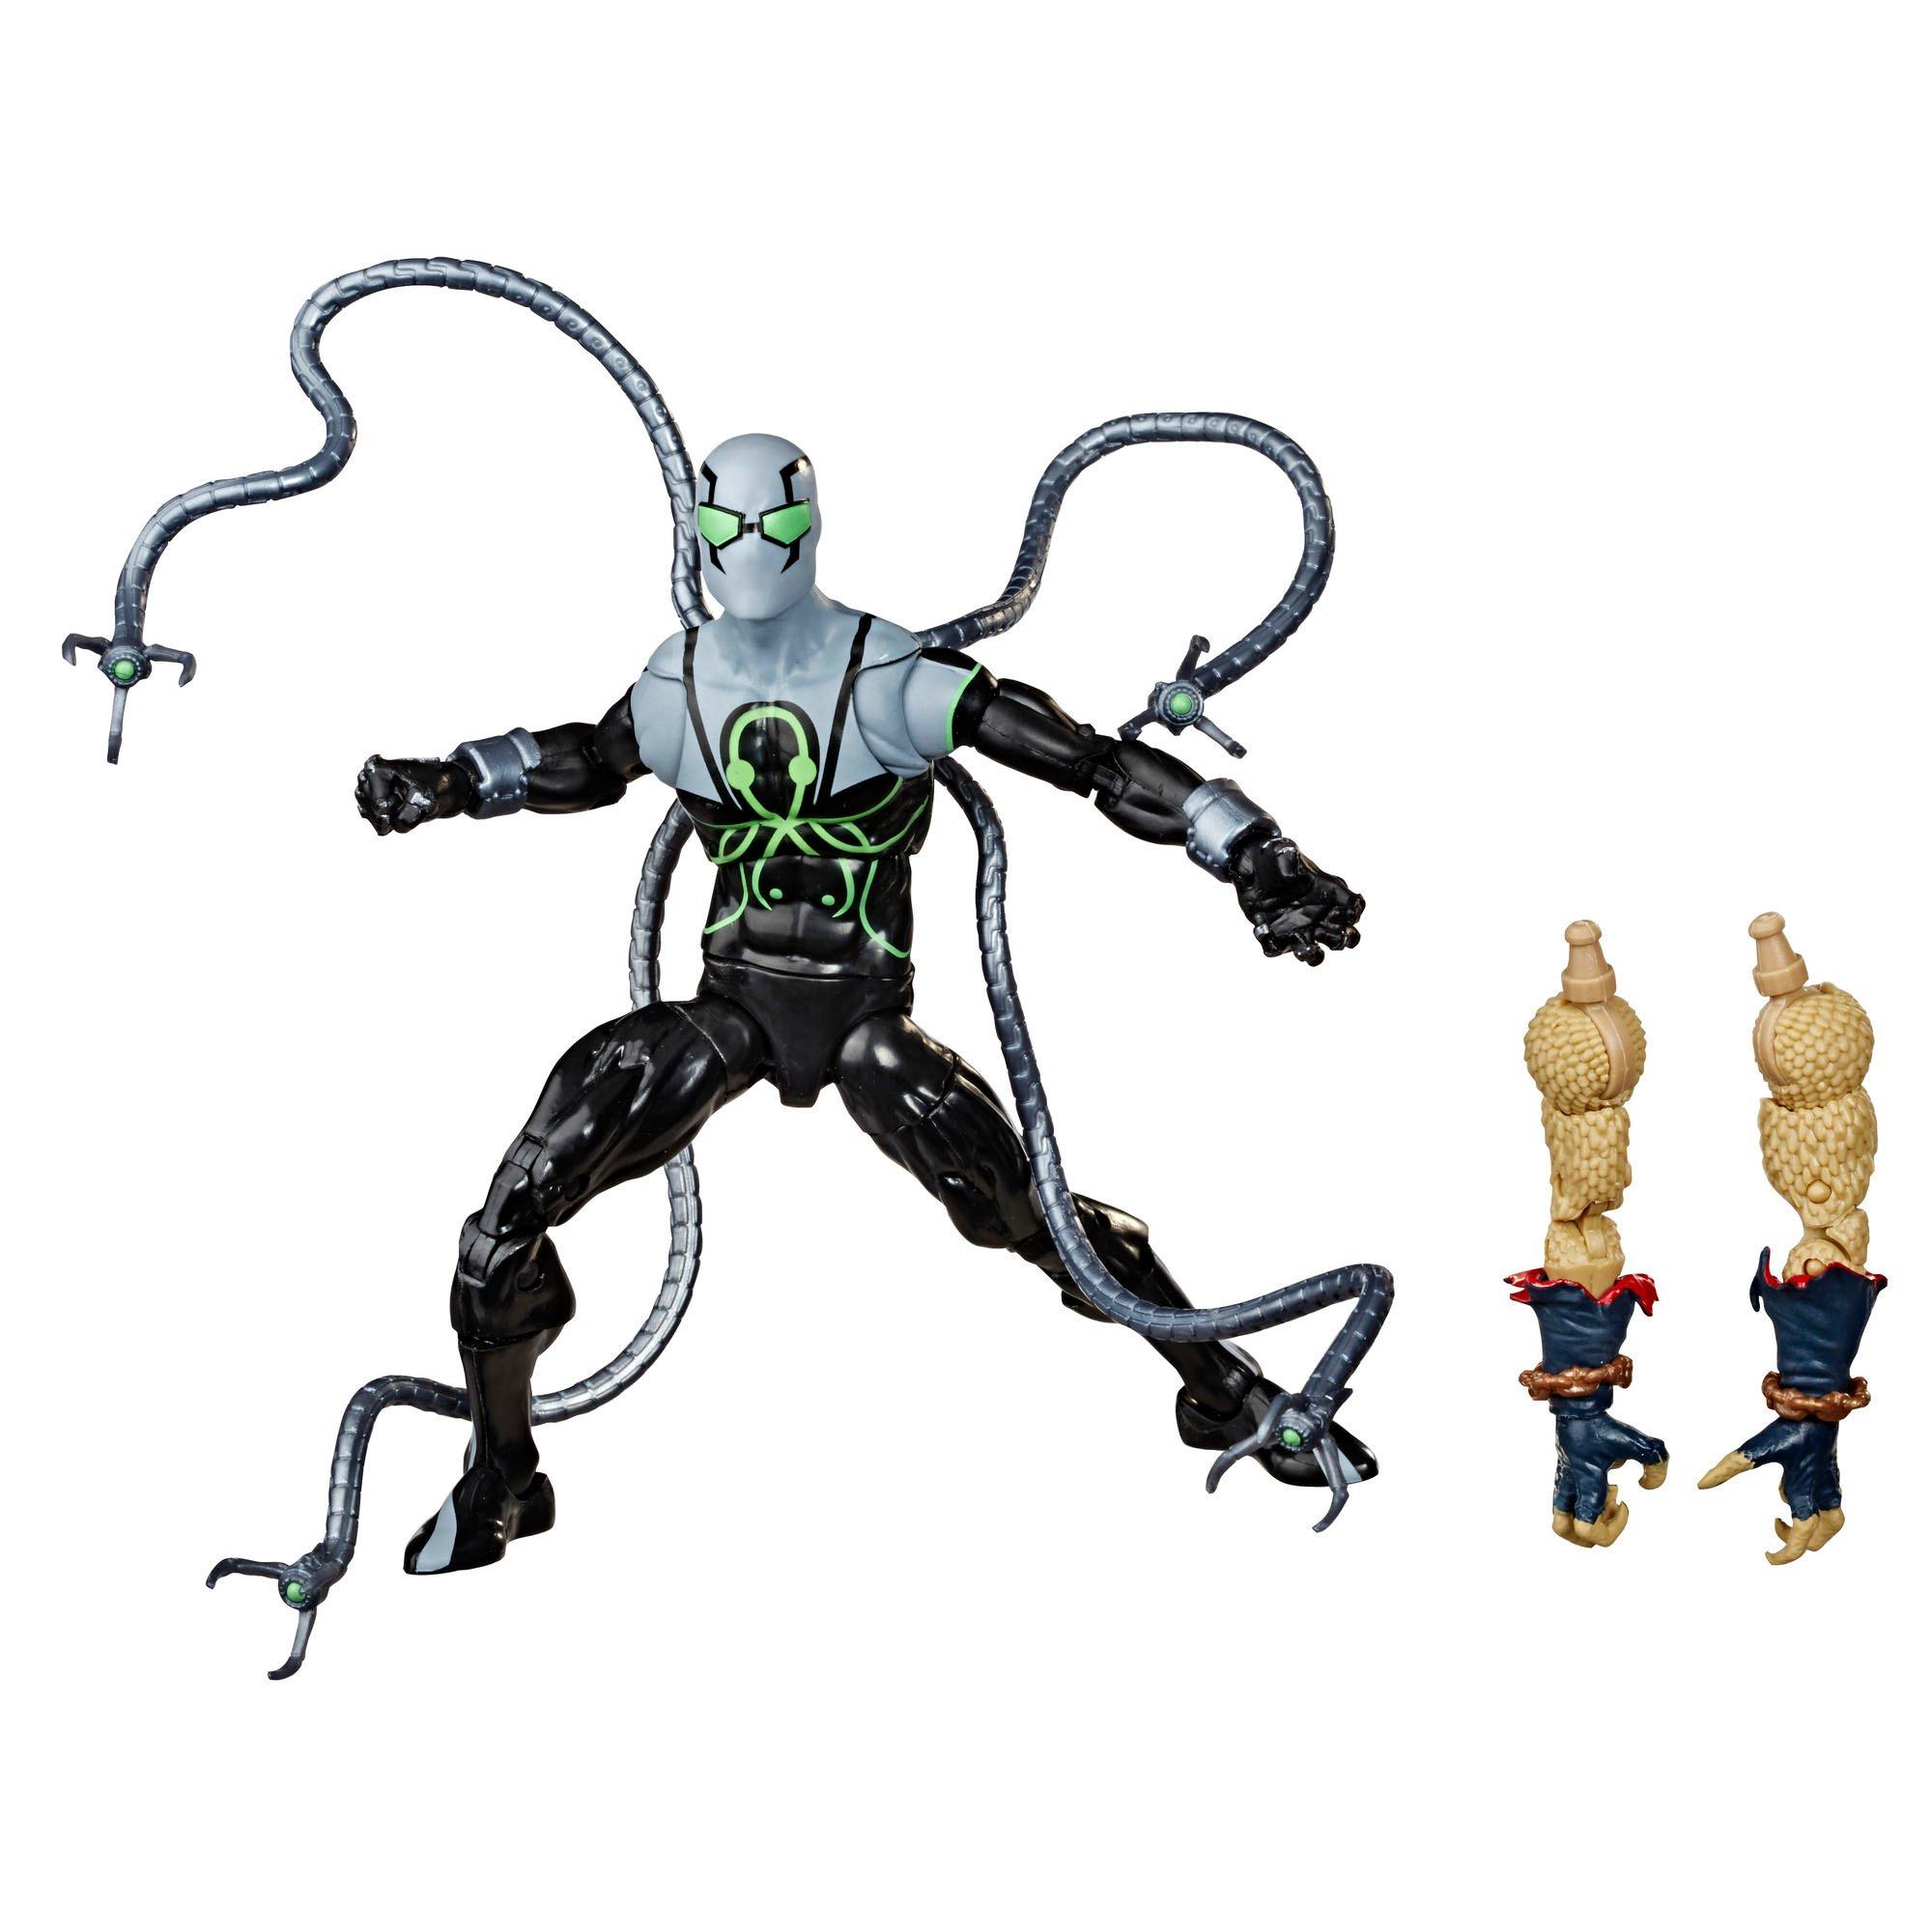 Hasbro Marvel Legends Series Spider-Man Superior Octopus 6-in Action Figure